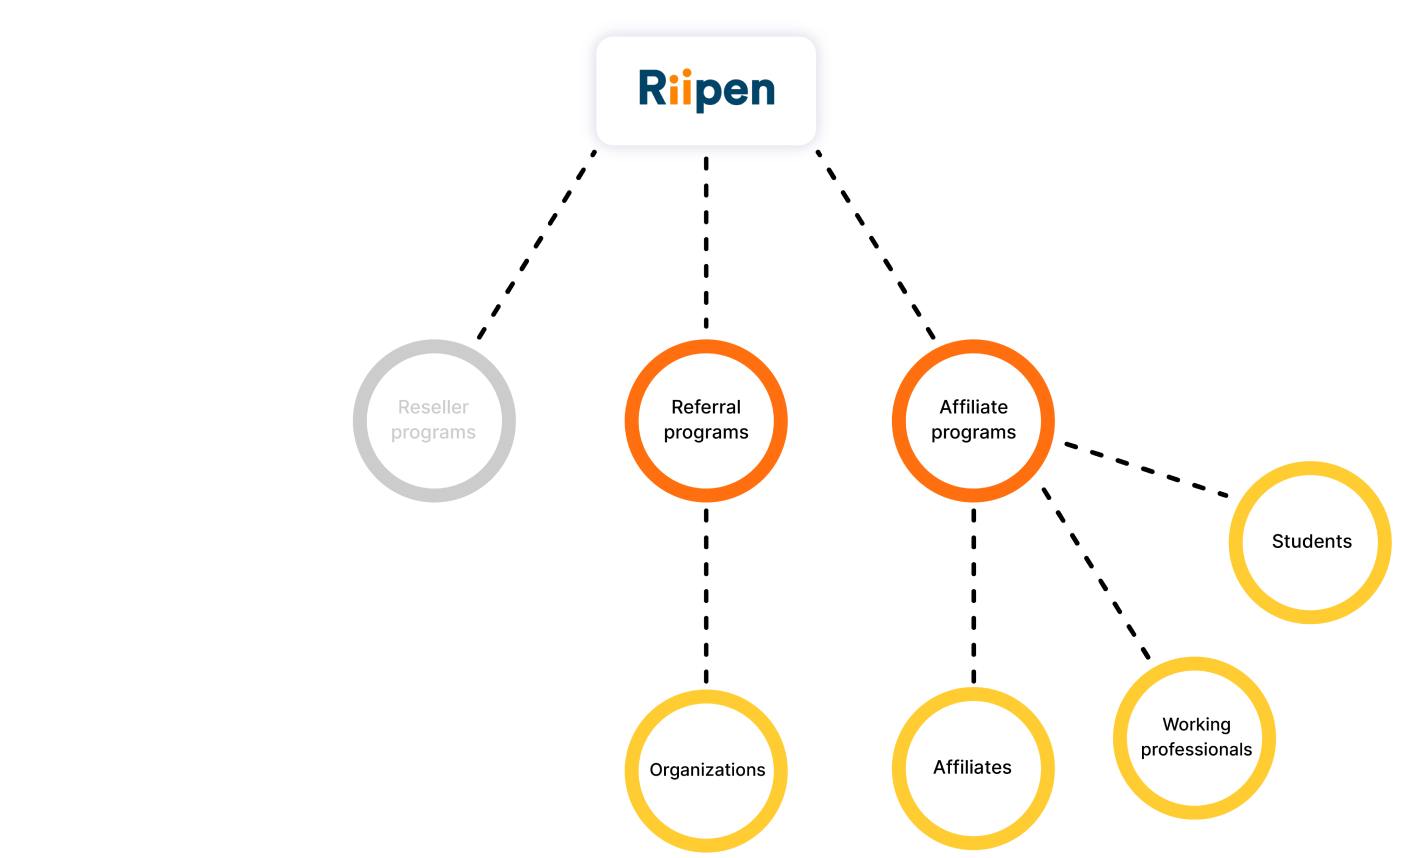 riipen's partner persona layout based on their partnership program